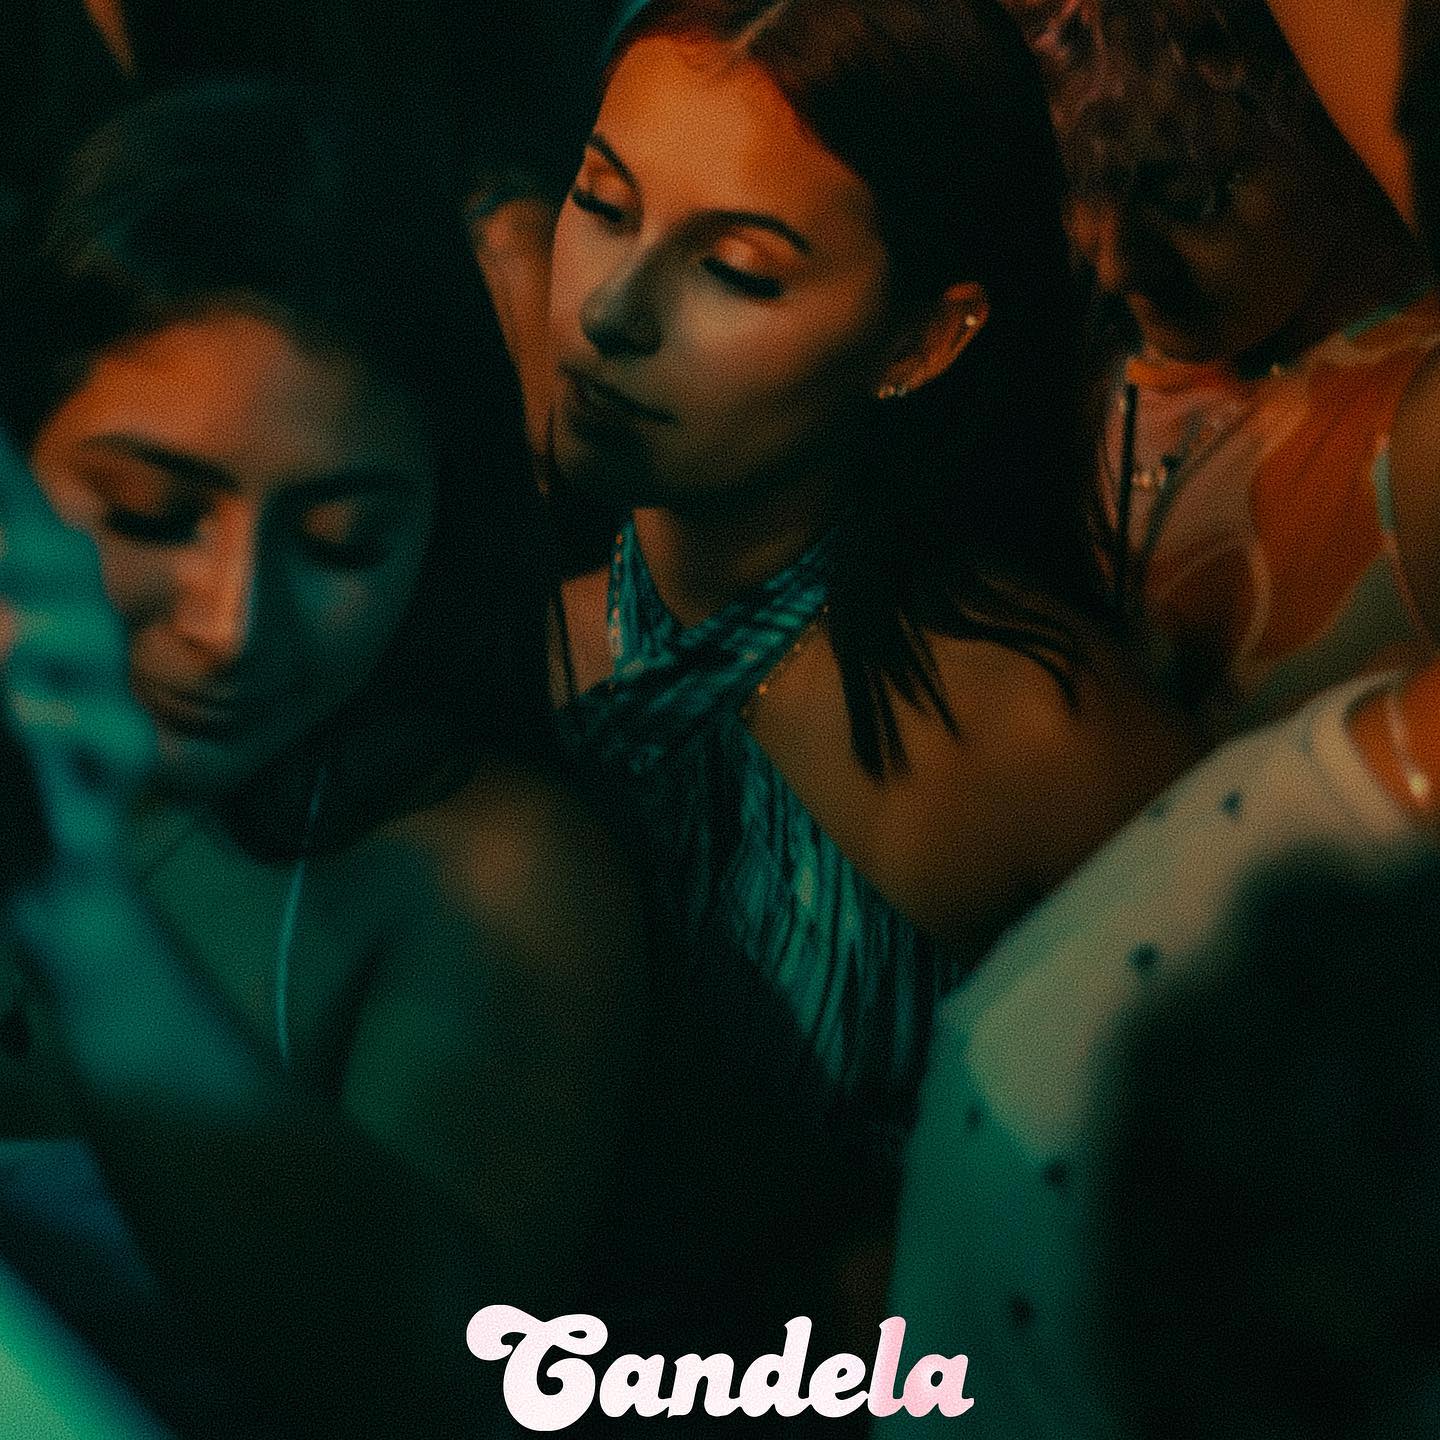 District Nightclub Atlanta presents Candela, DJ EU